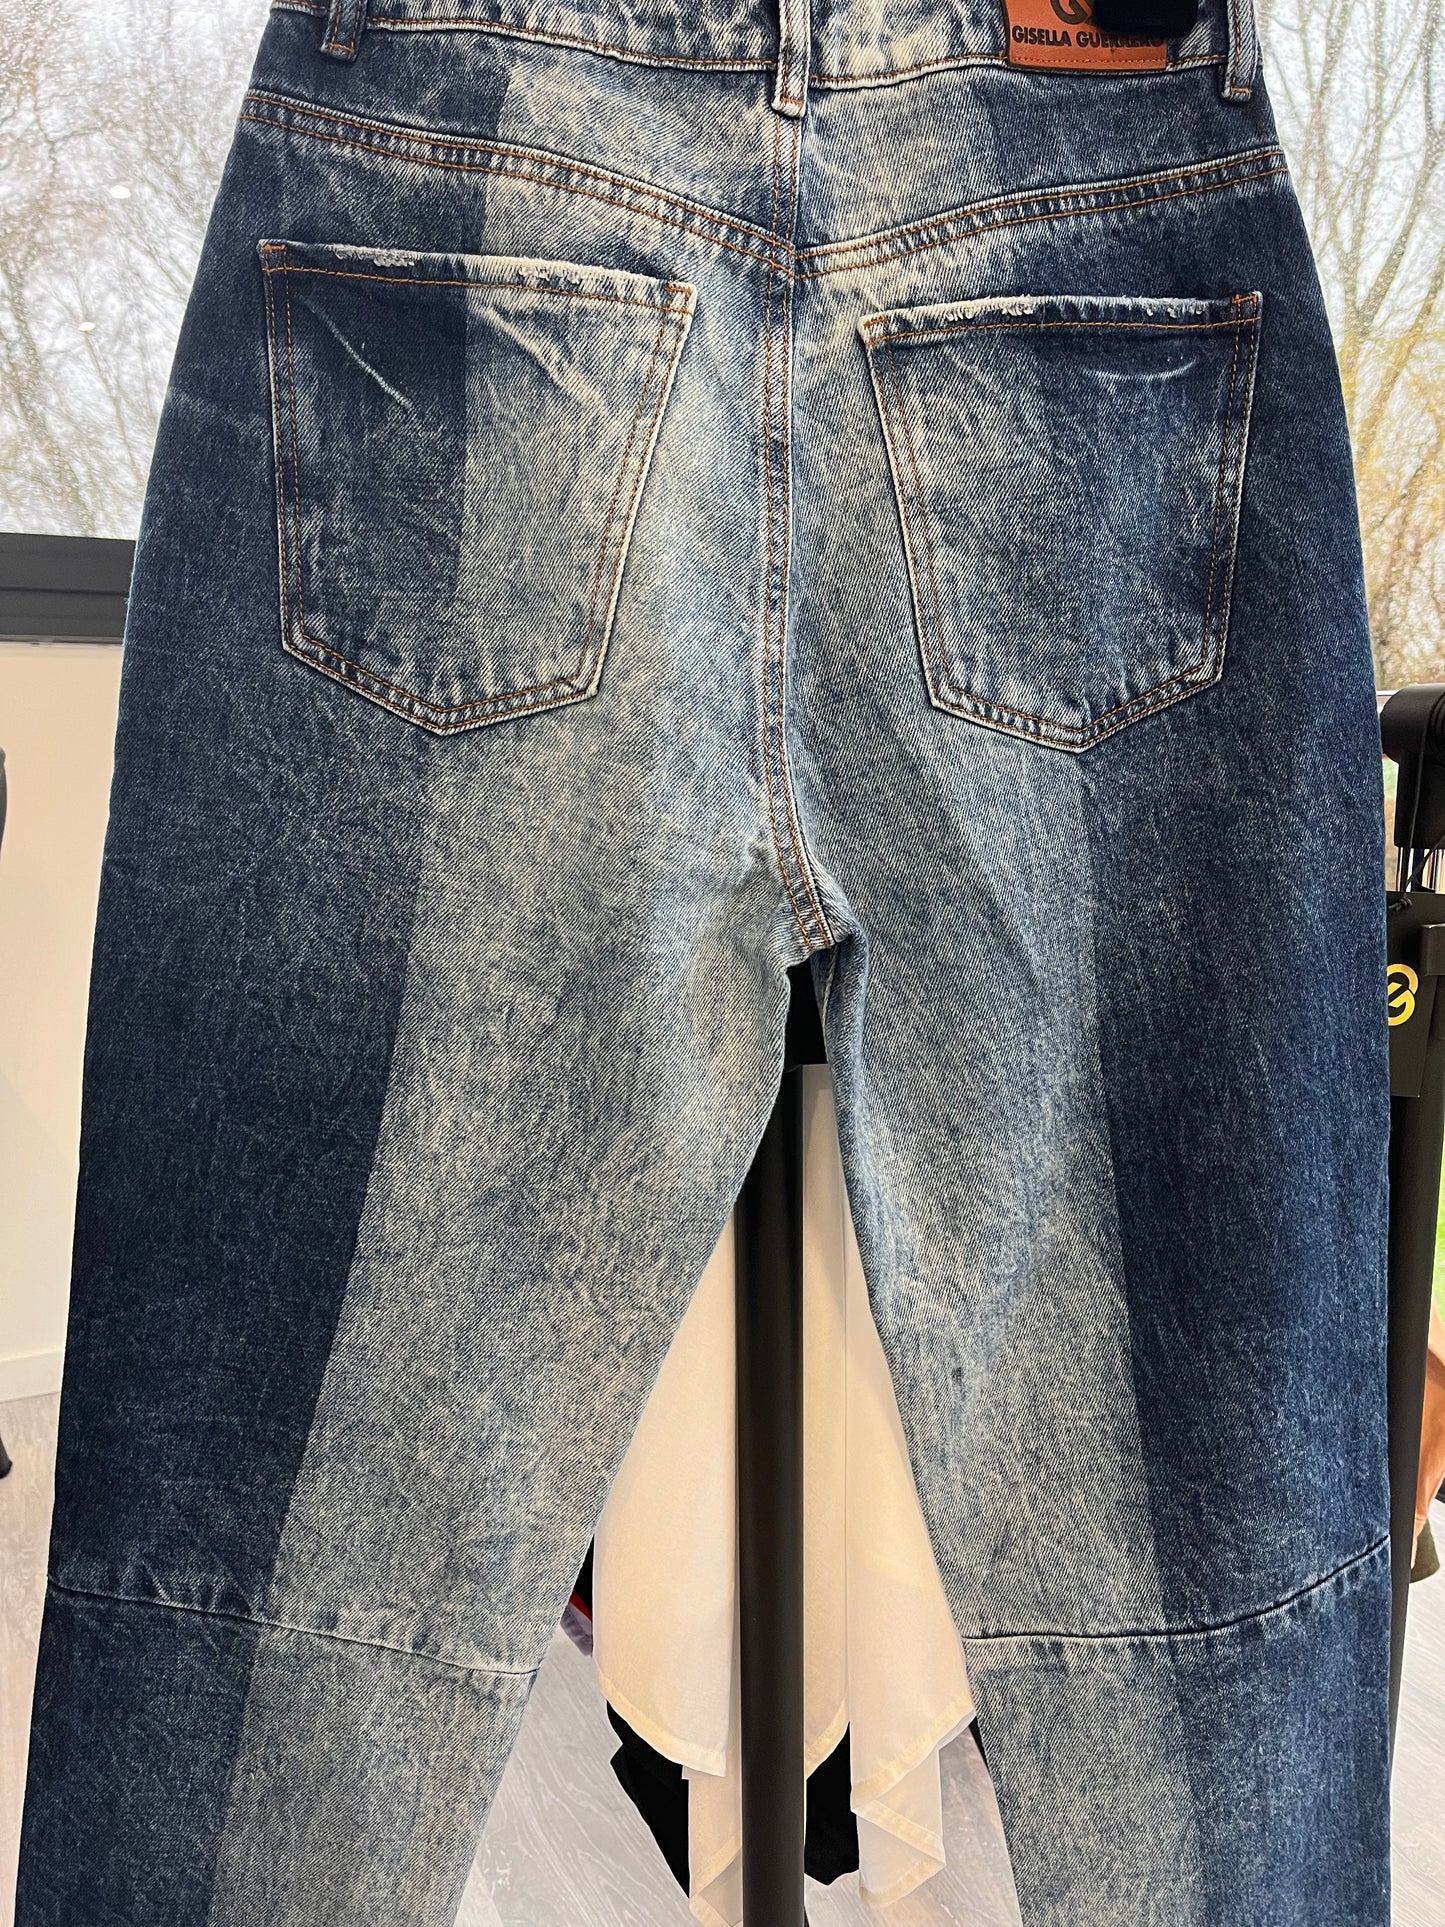 GG015: Gradient Vertical Bicolor Jeans